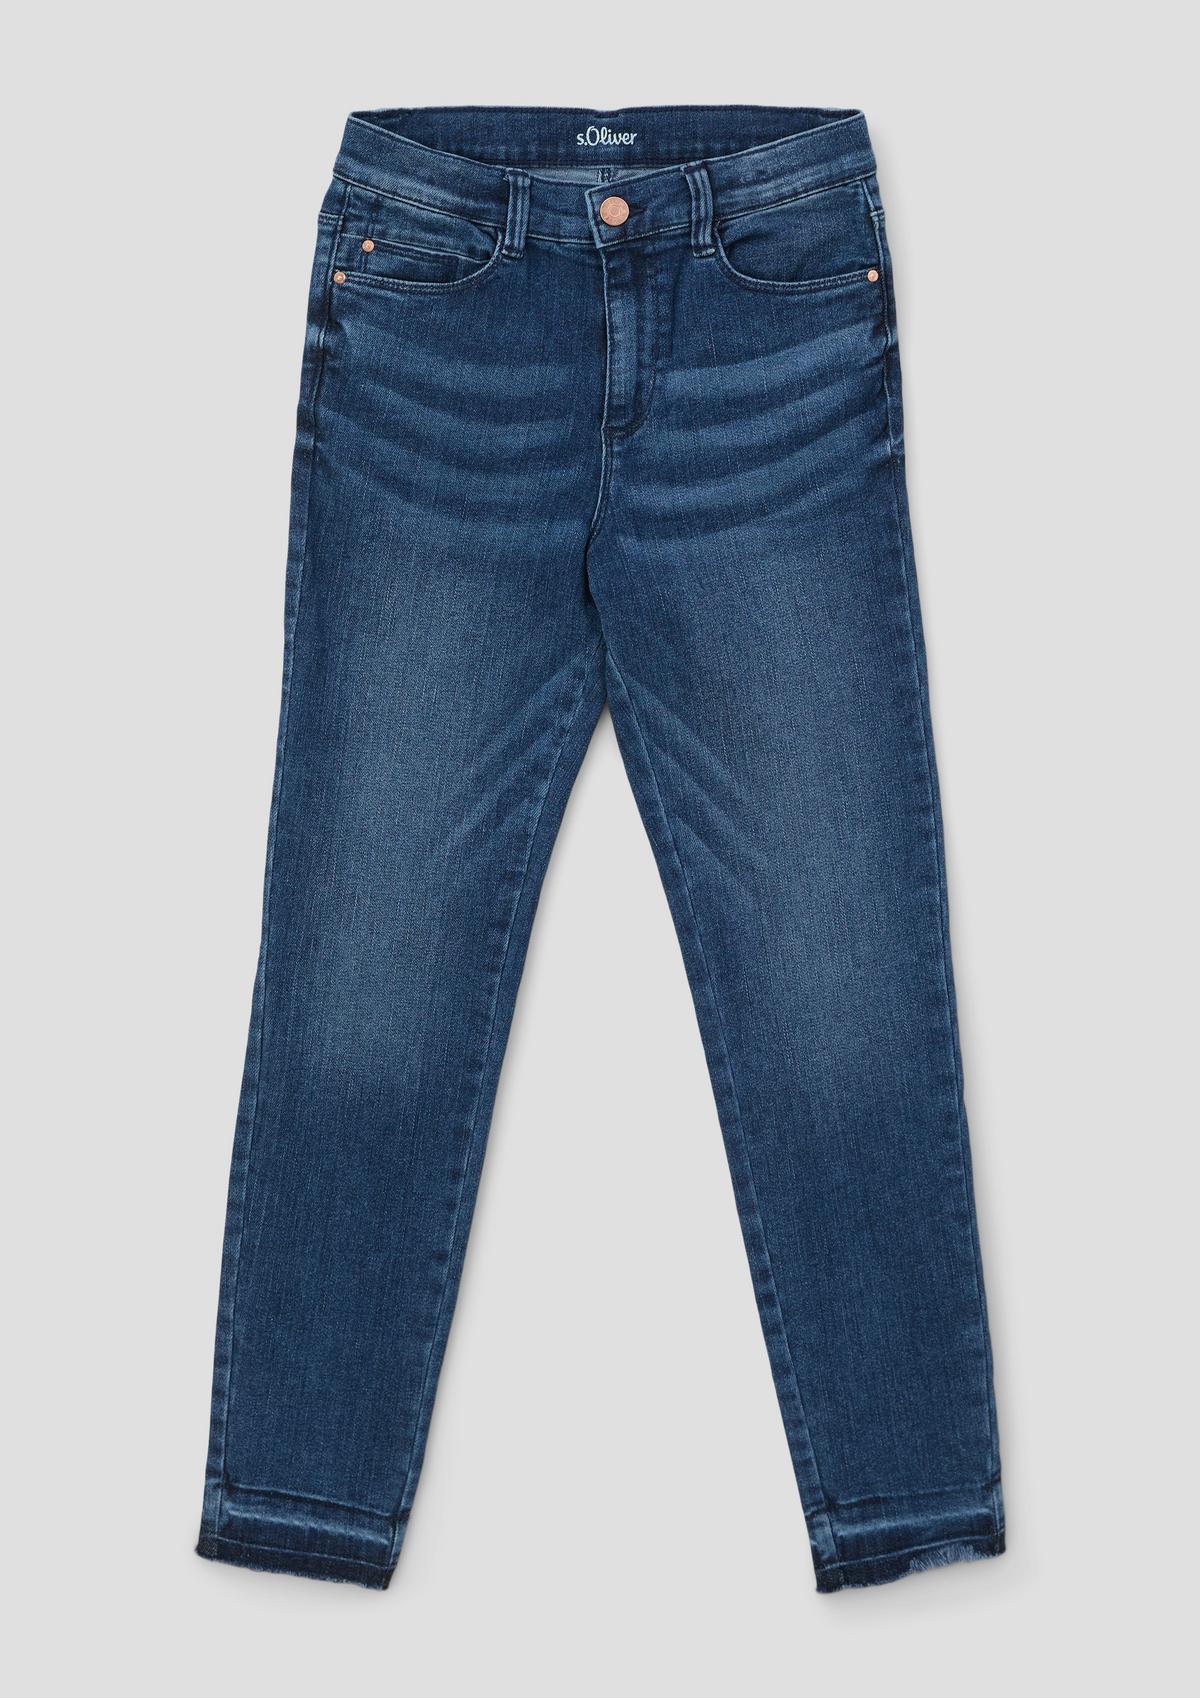 s.Oliver Suri ankle-length jeans / regular fit / mid rise / slim leg